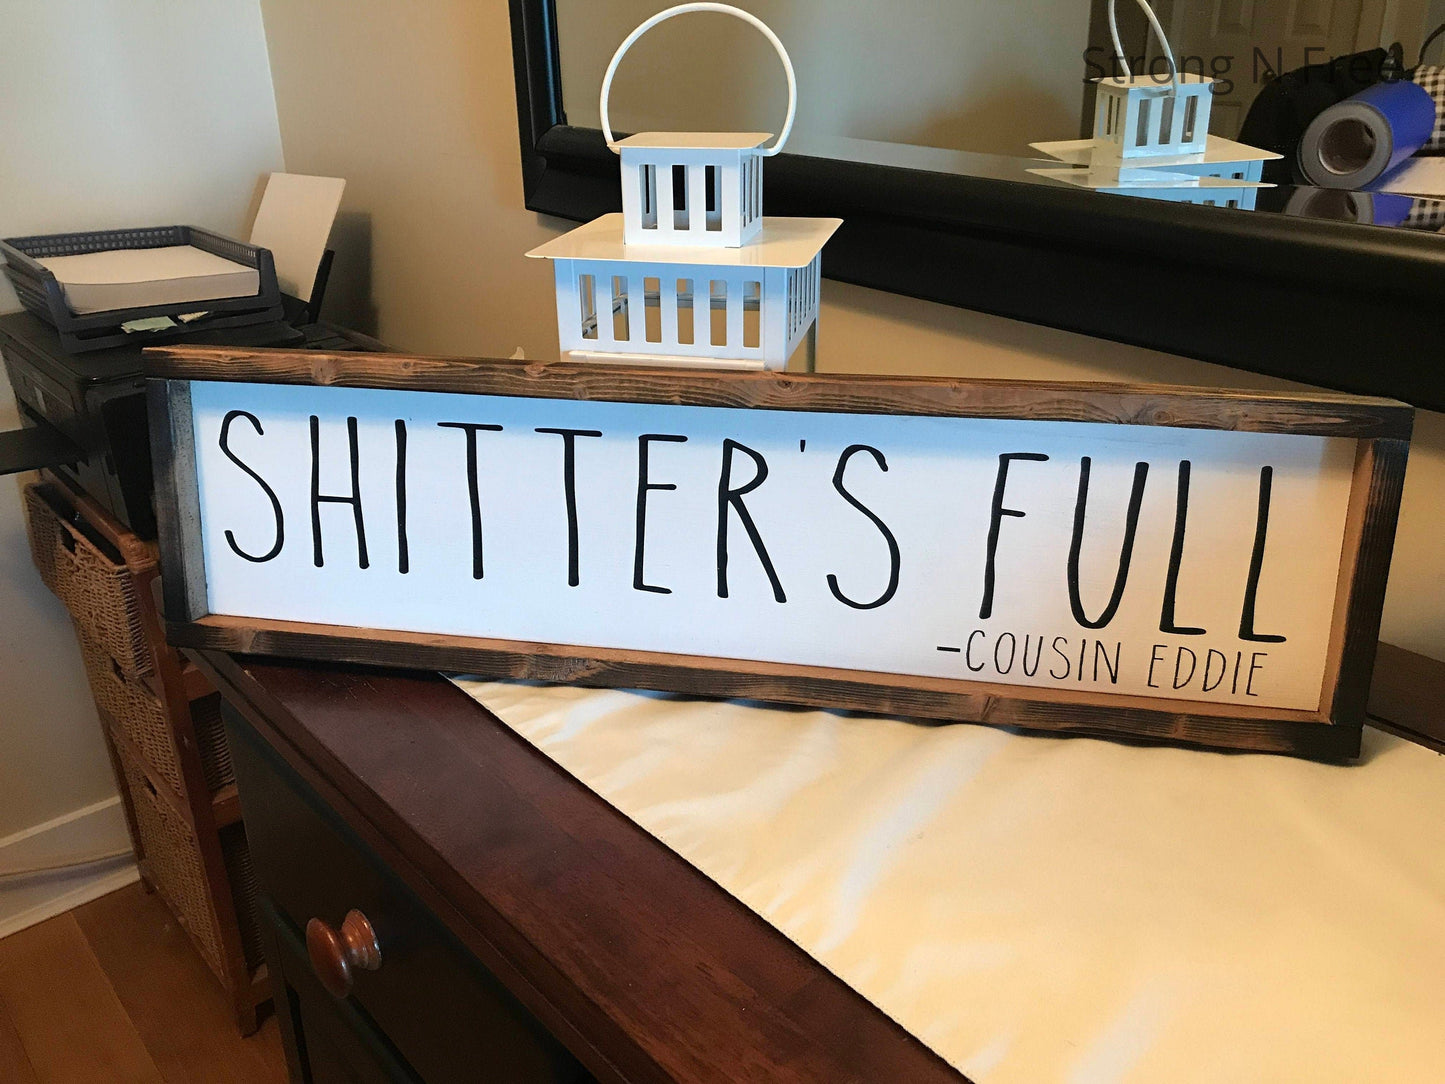 Shitter's Full Sign, Shitter's Full, Shitter's Full Clark, Camper Decor, Bathroom Decor, Camping Sign, Cousin Eddie, Farmhouse Decor, Sign